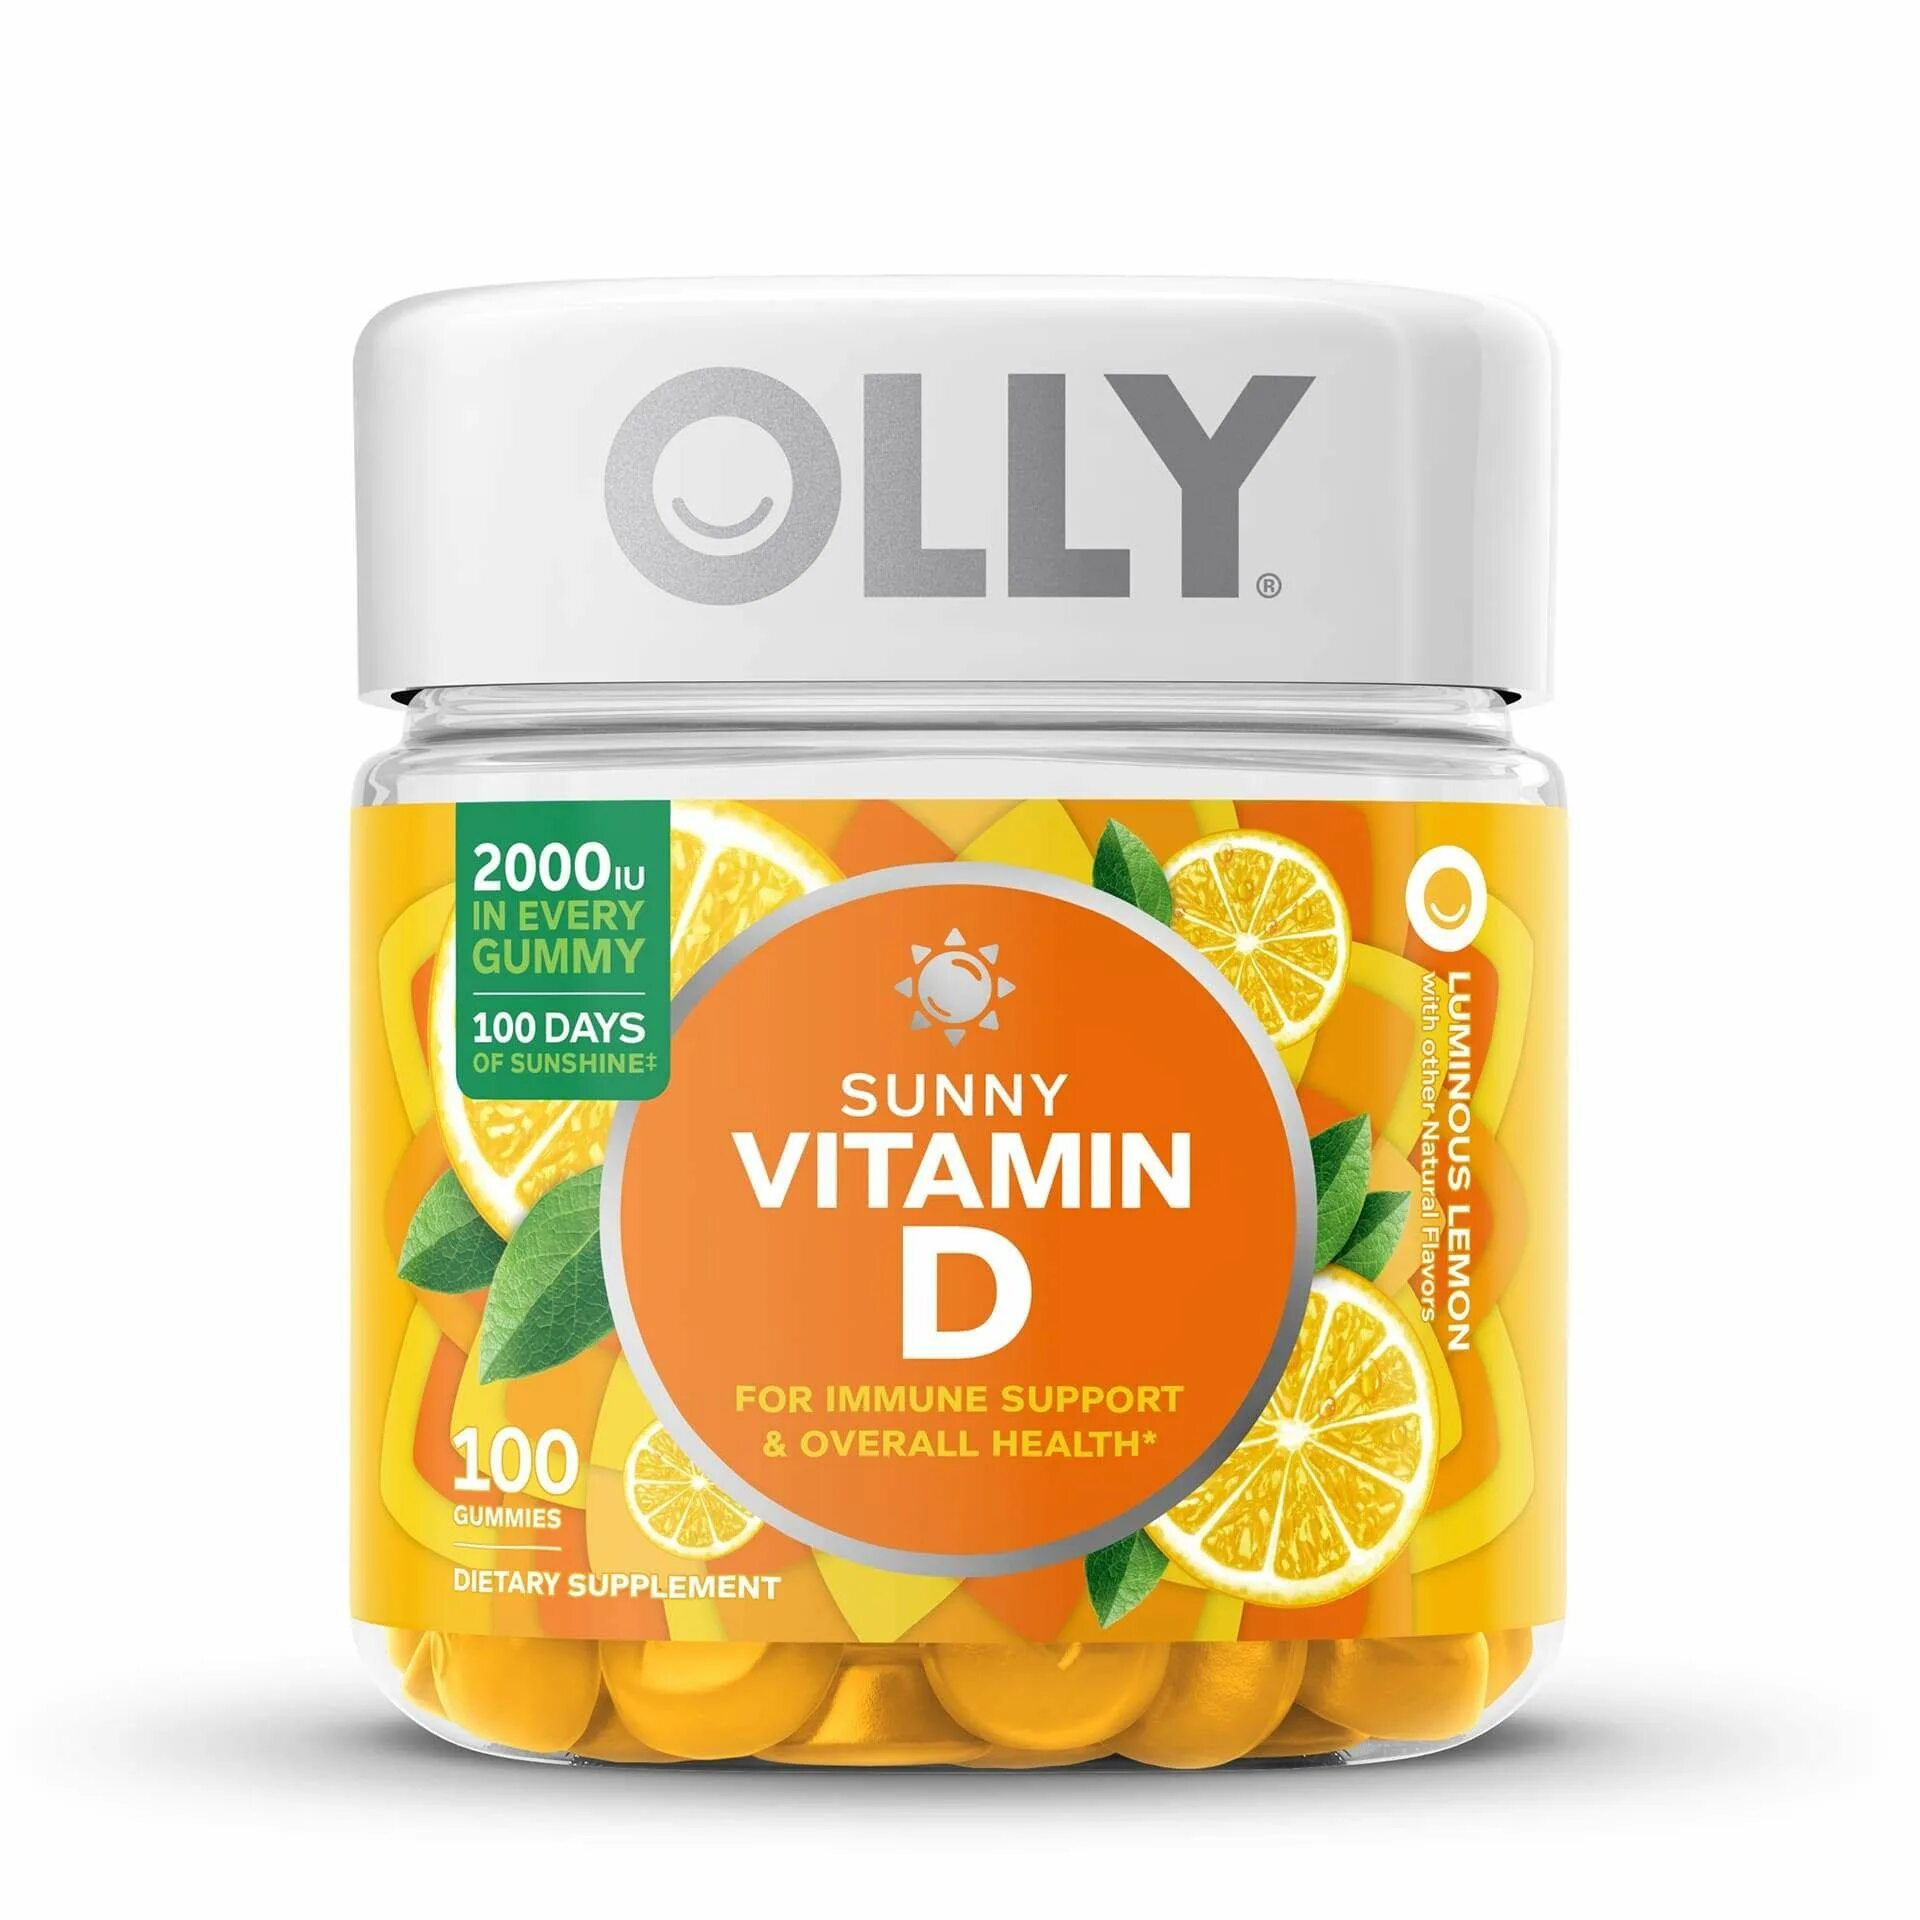 Radiance vitamins. Olly витамины. Витамин д солнце. Витамины Olly для детей. Sunny Vitamin d.